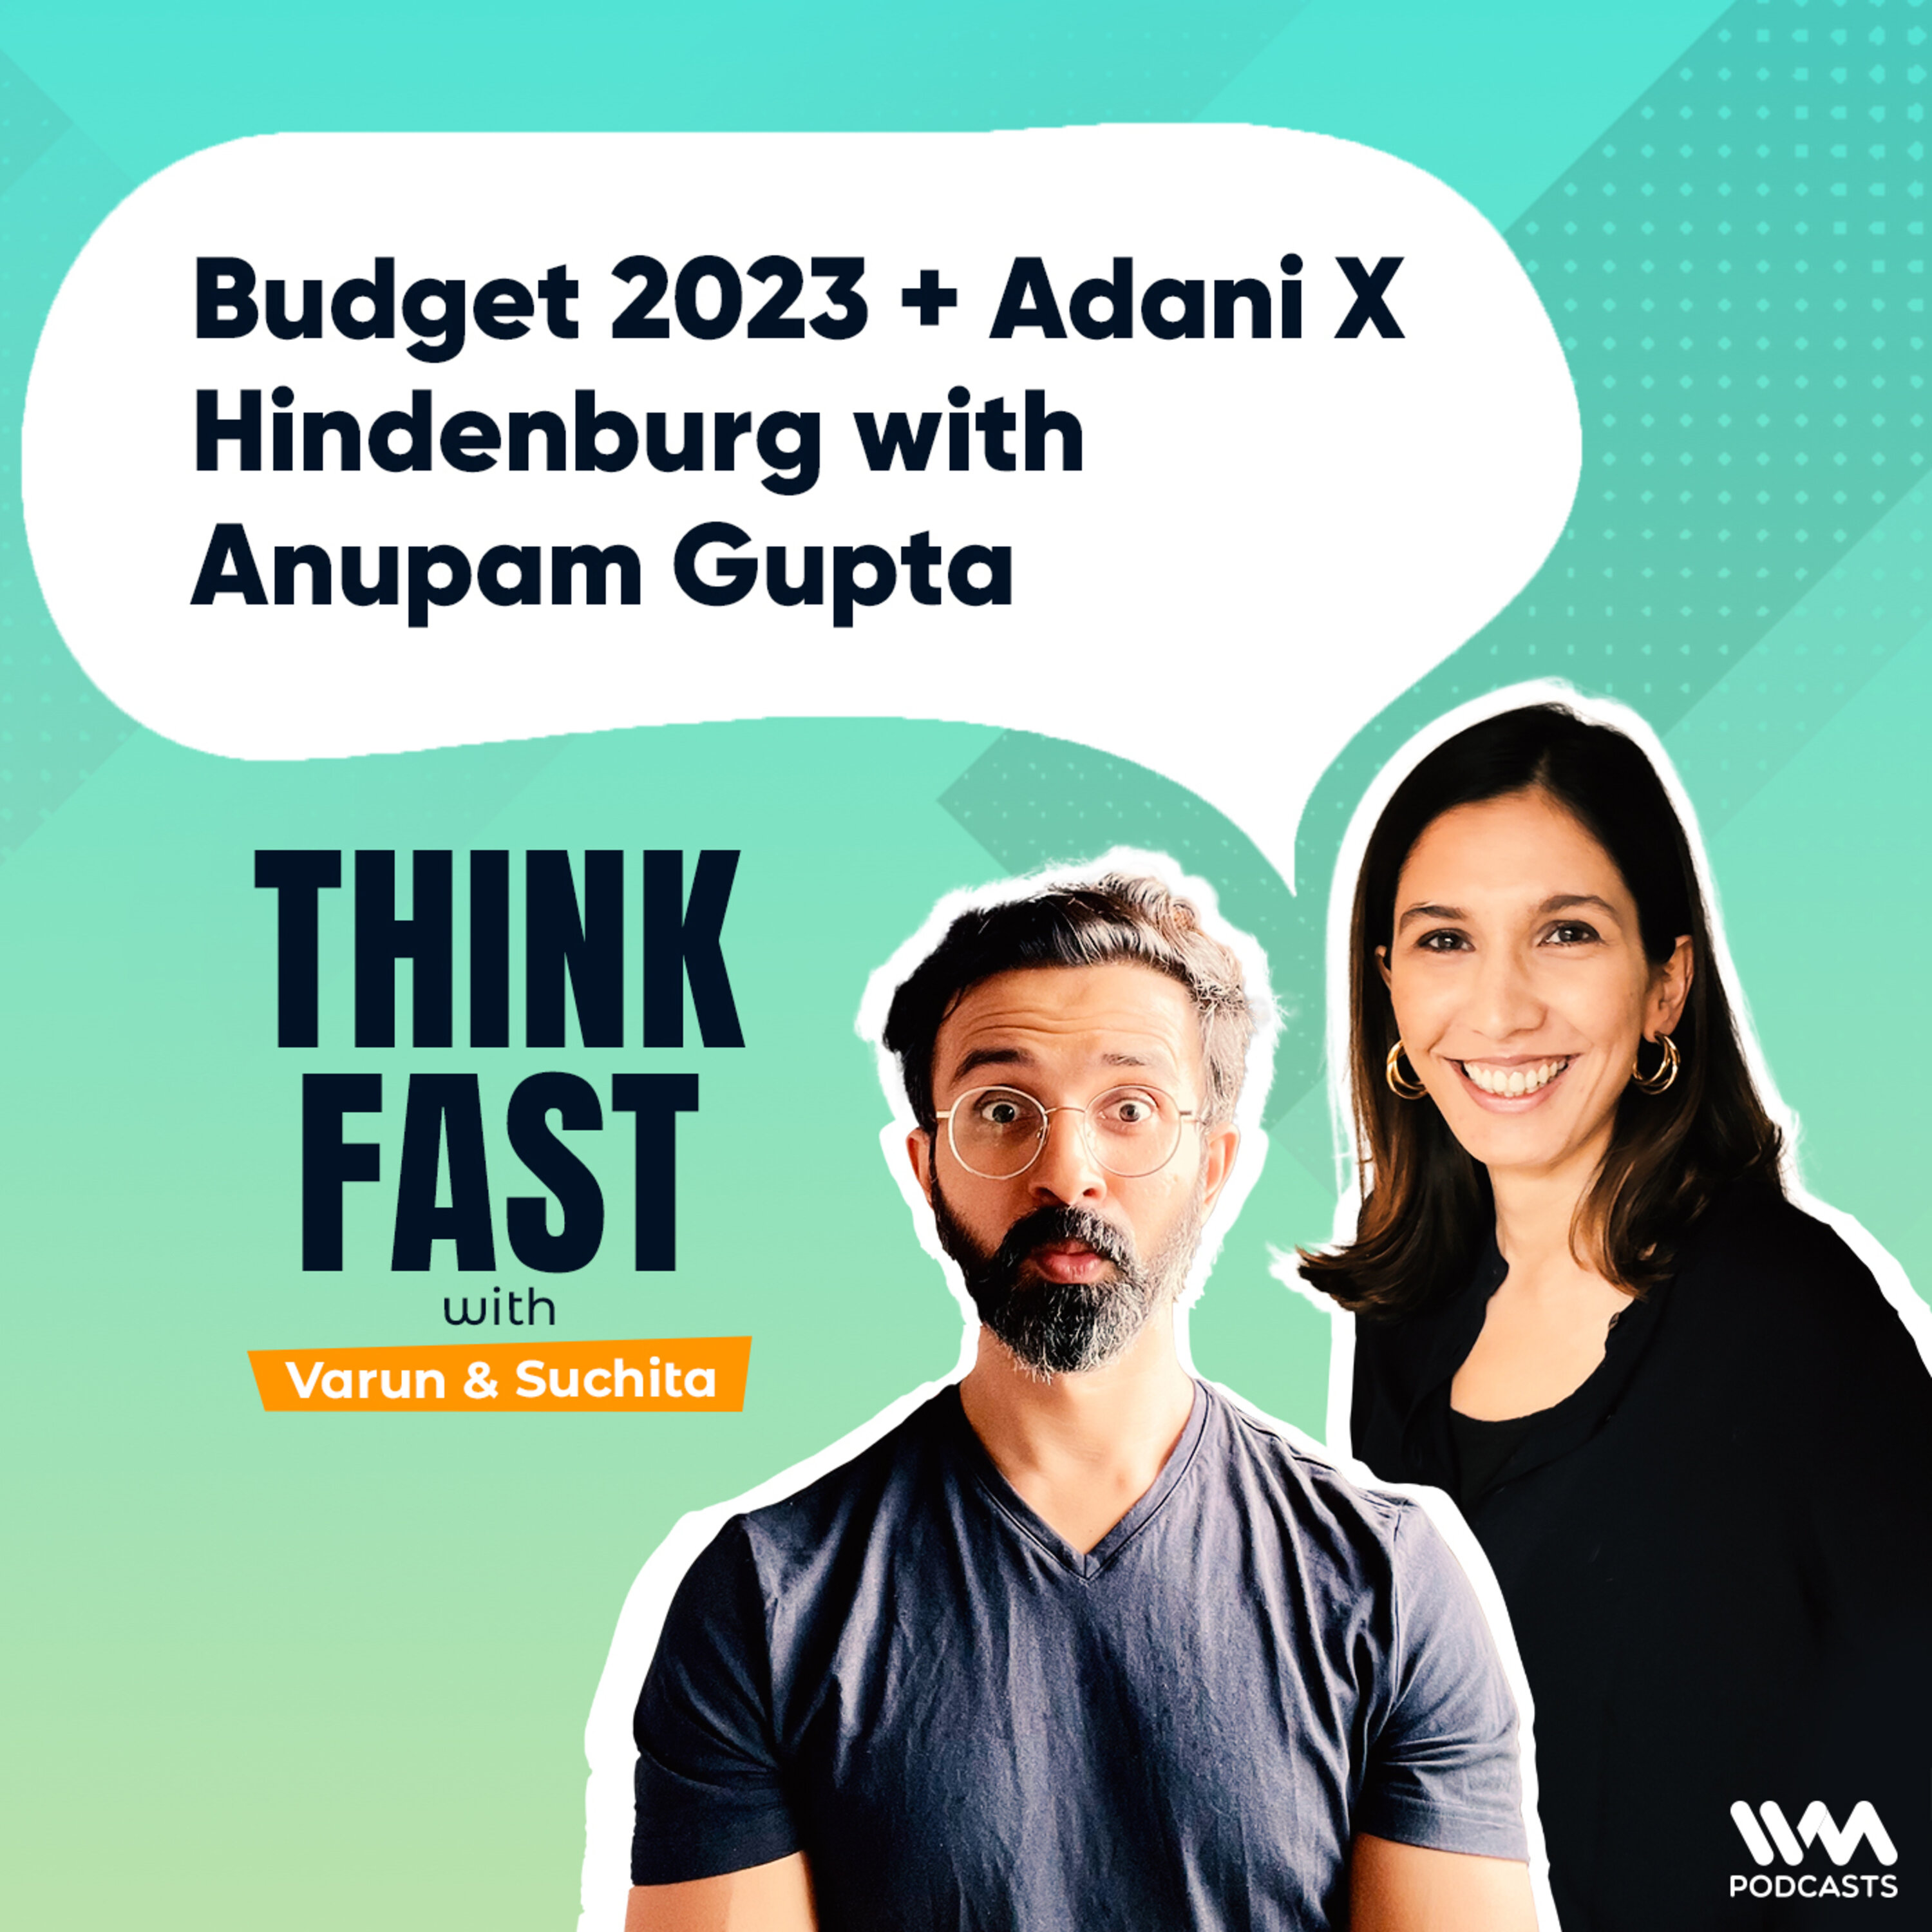 Budget 2023 + Adani X Hindenburg with Anupam Gupta